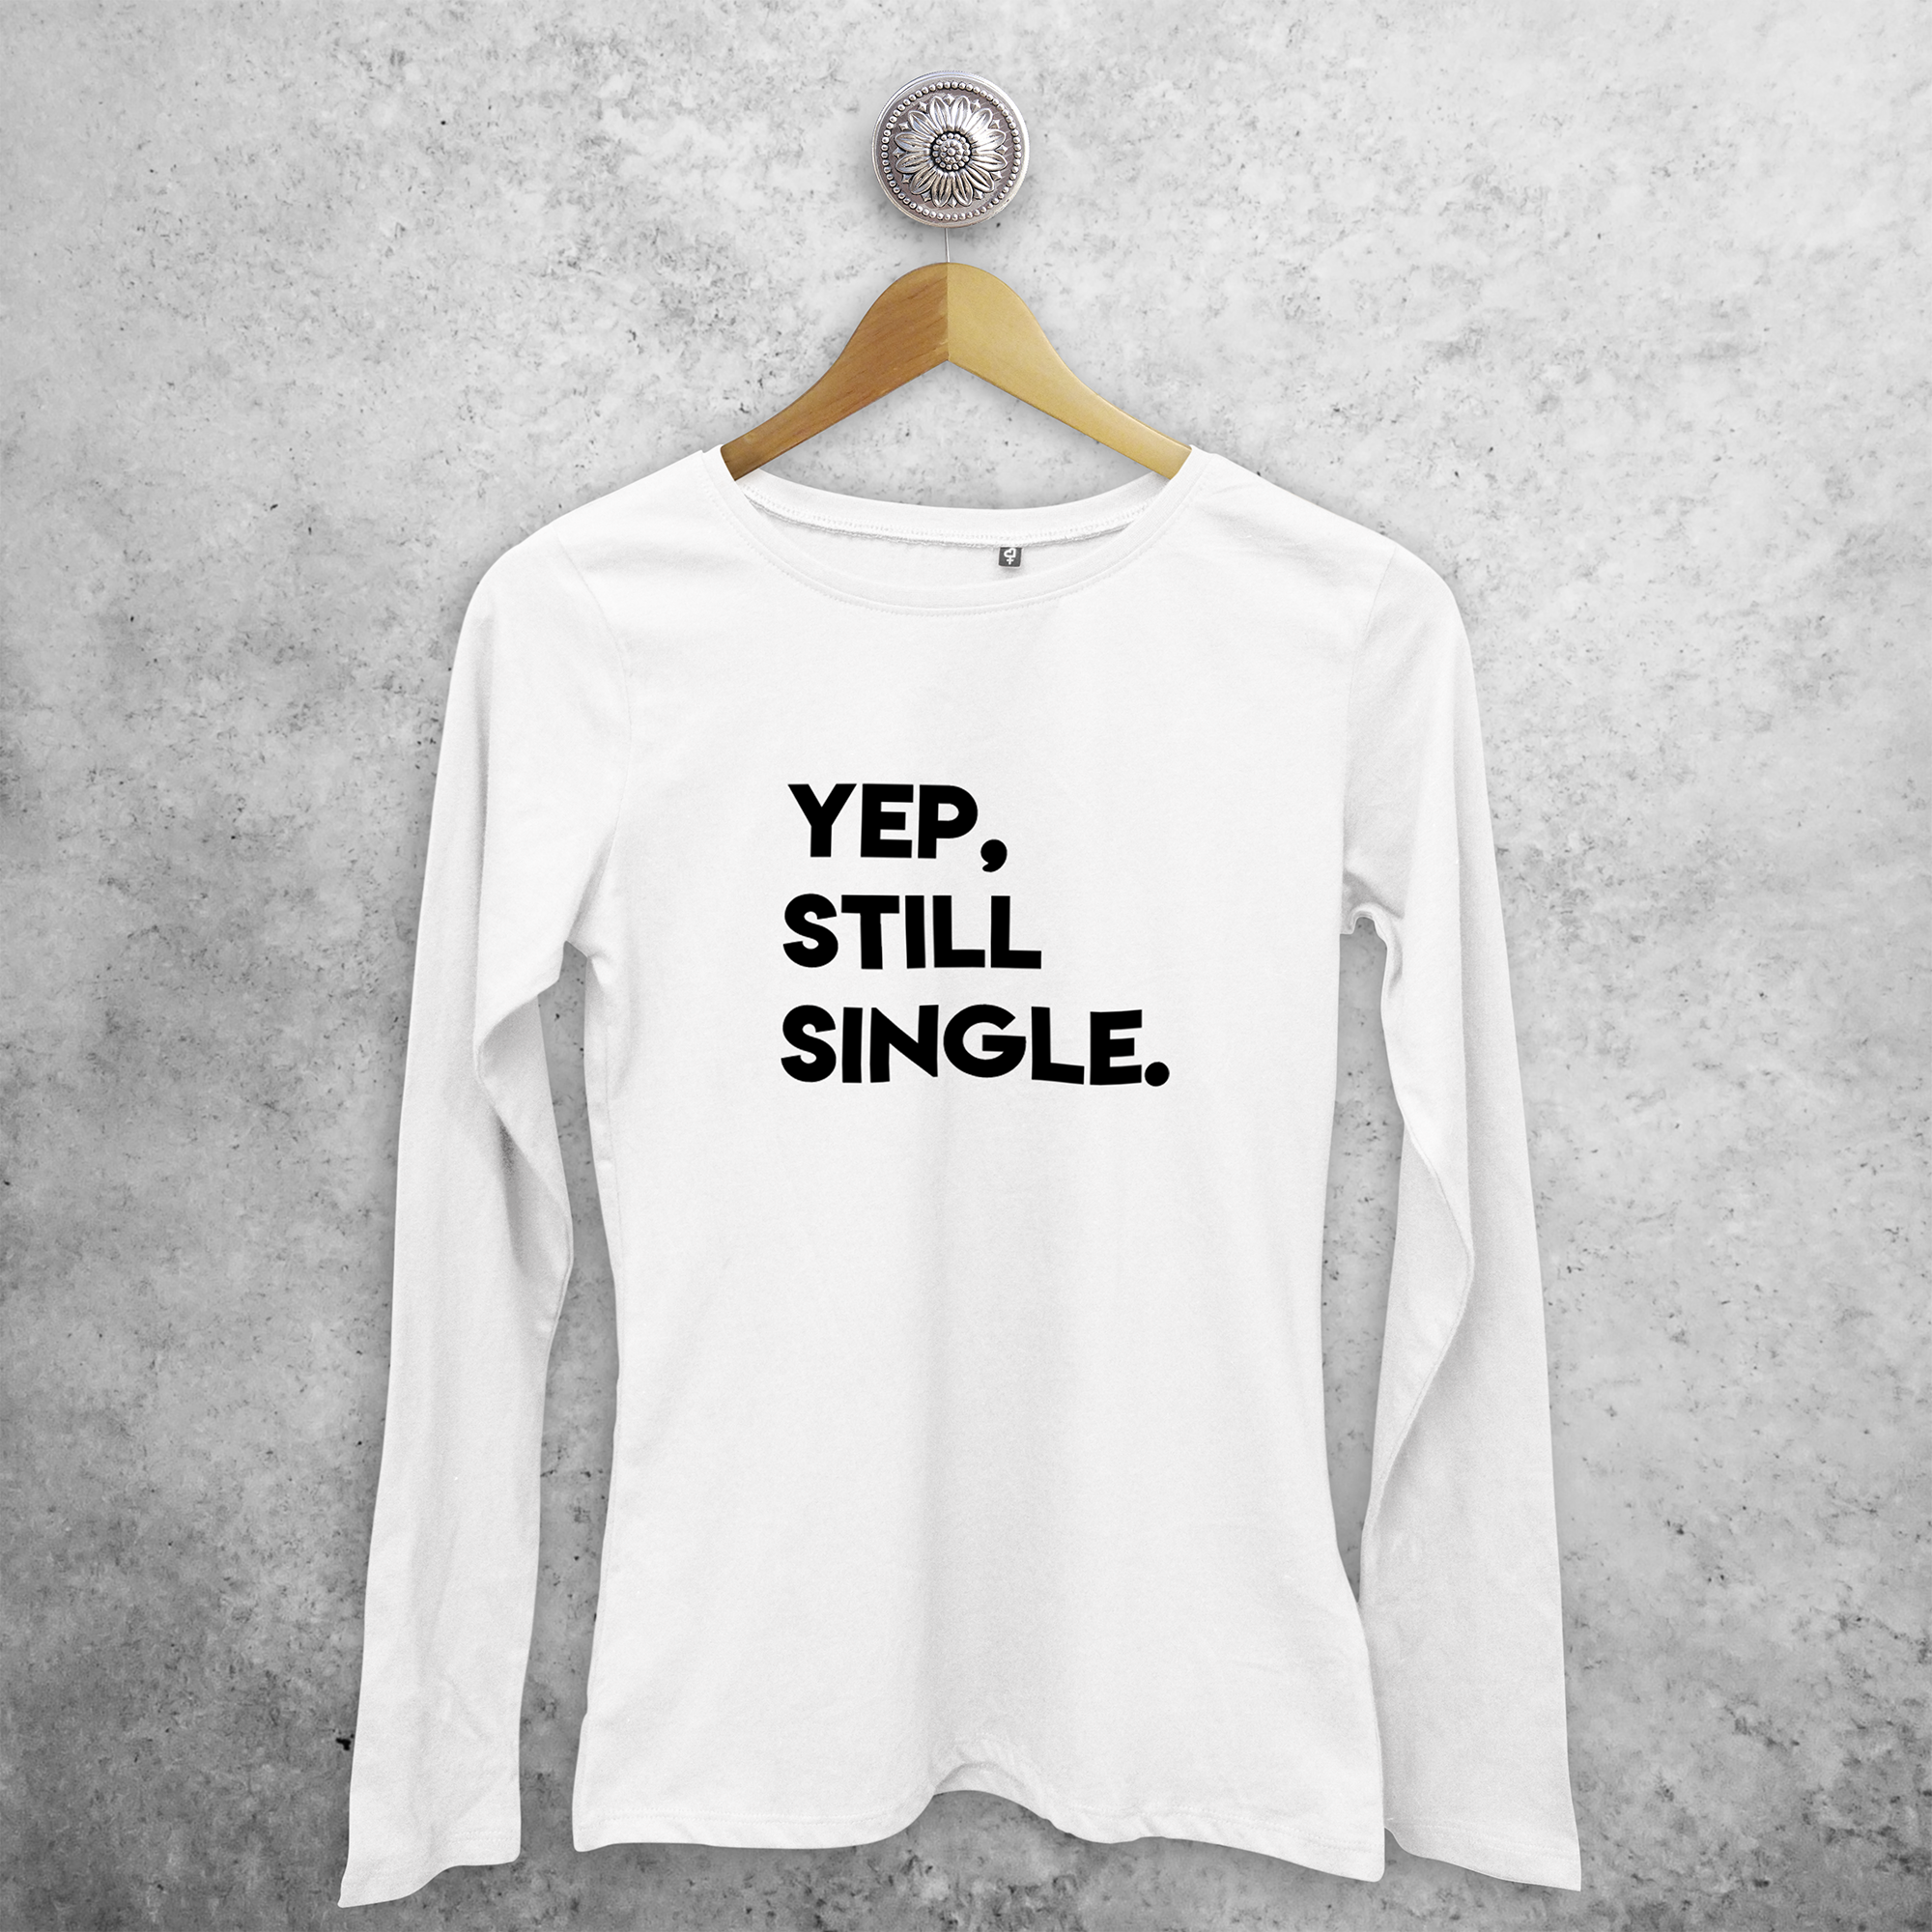 'Yep, still single' adult longsleeve shirt